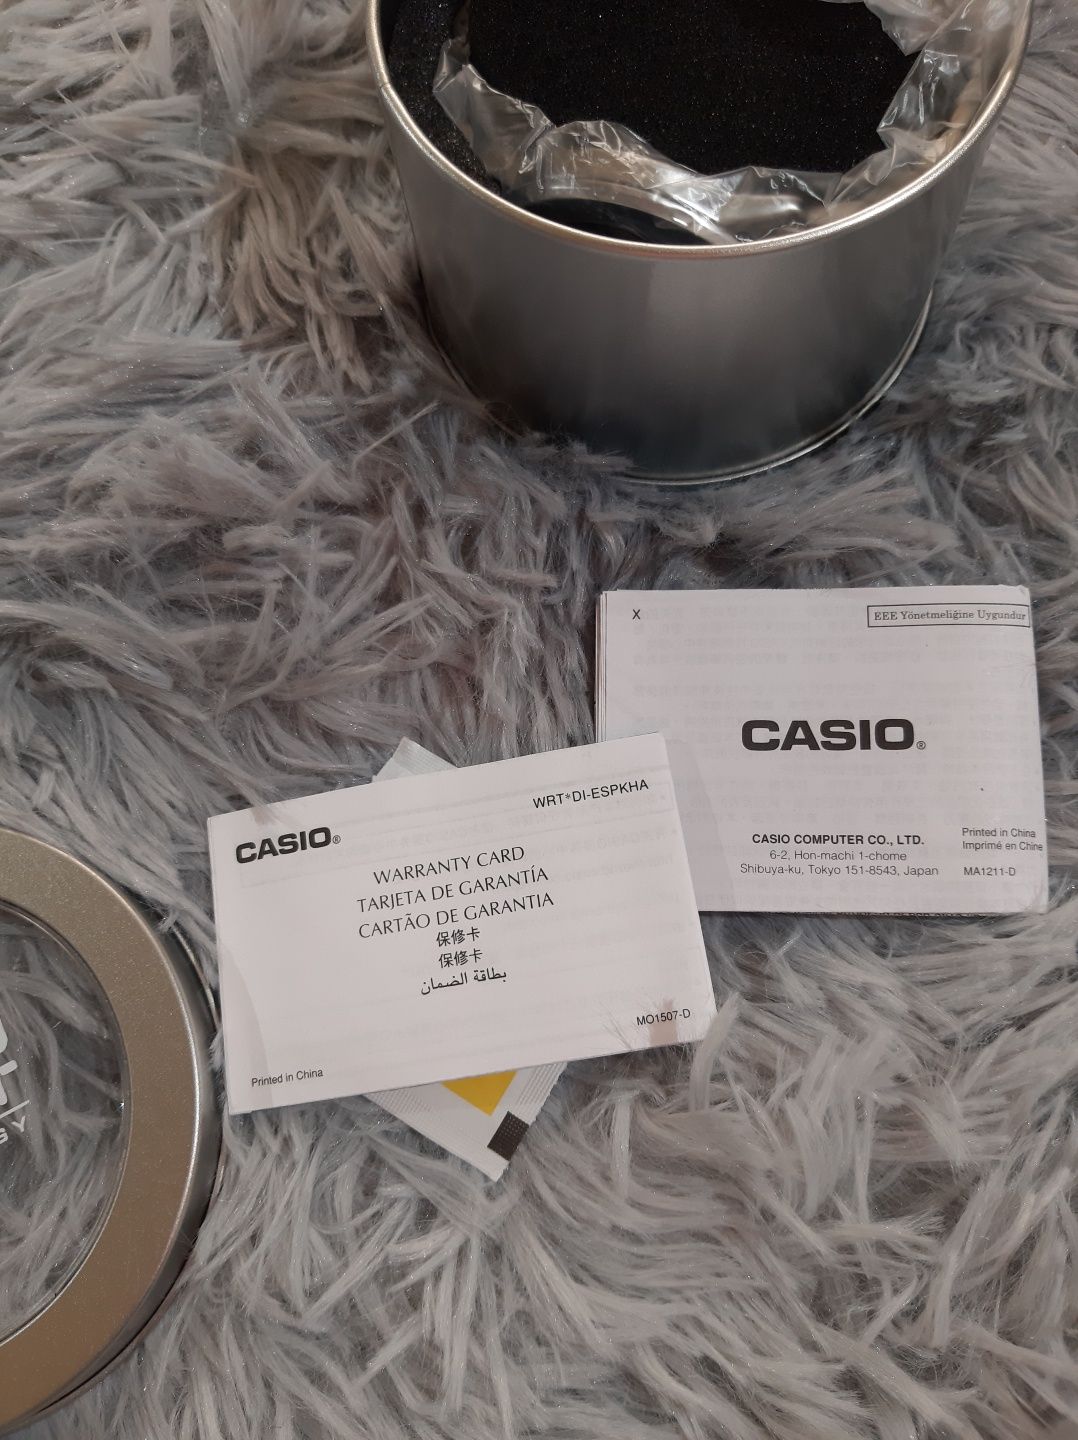 Стильний годинник Casio (оригінал) новий